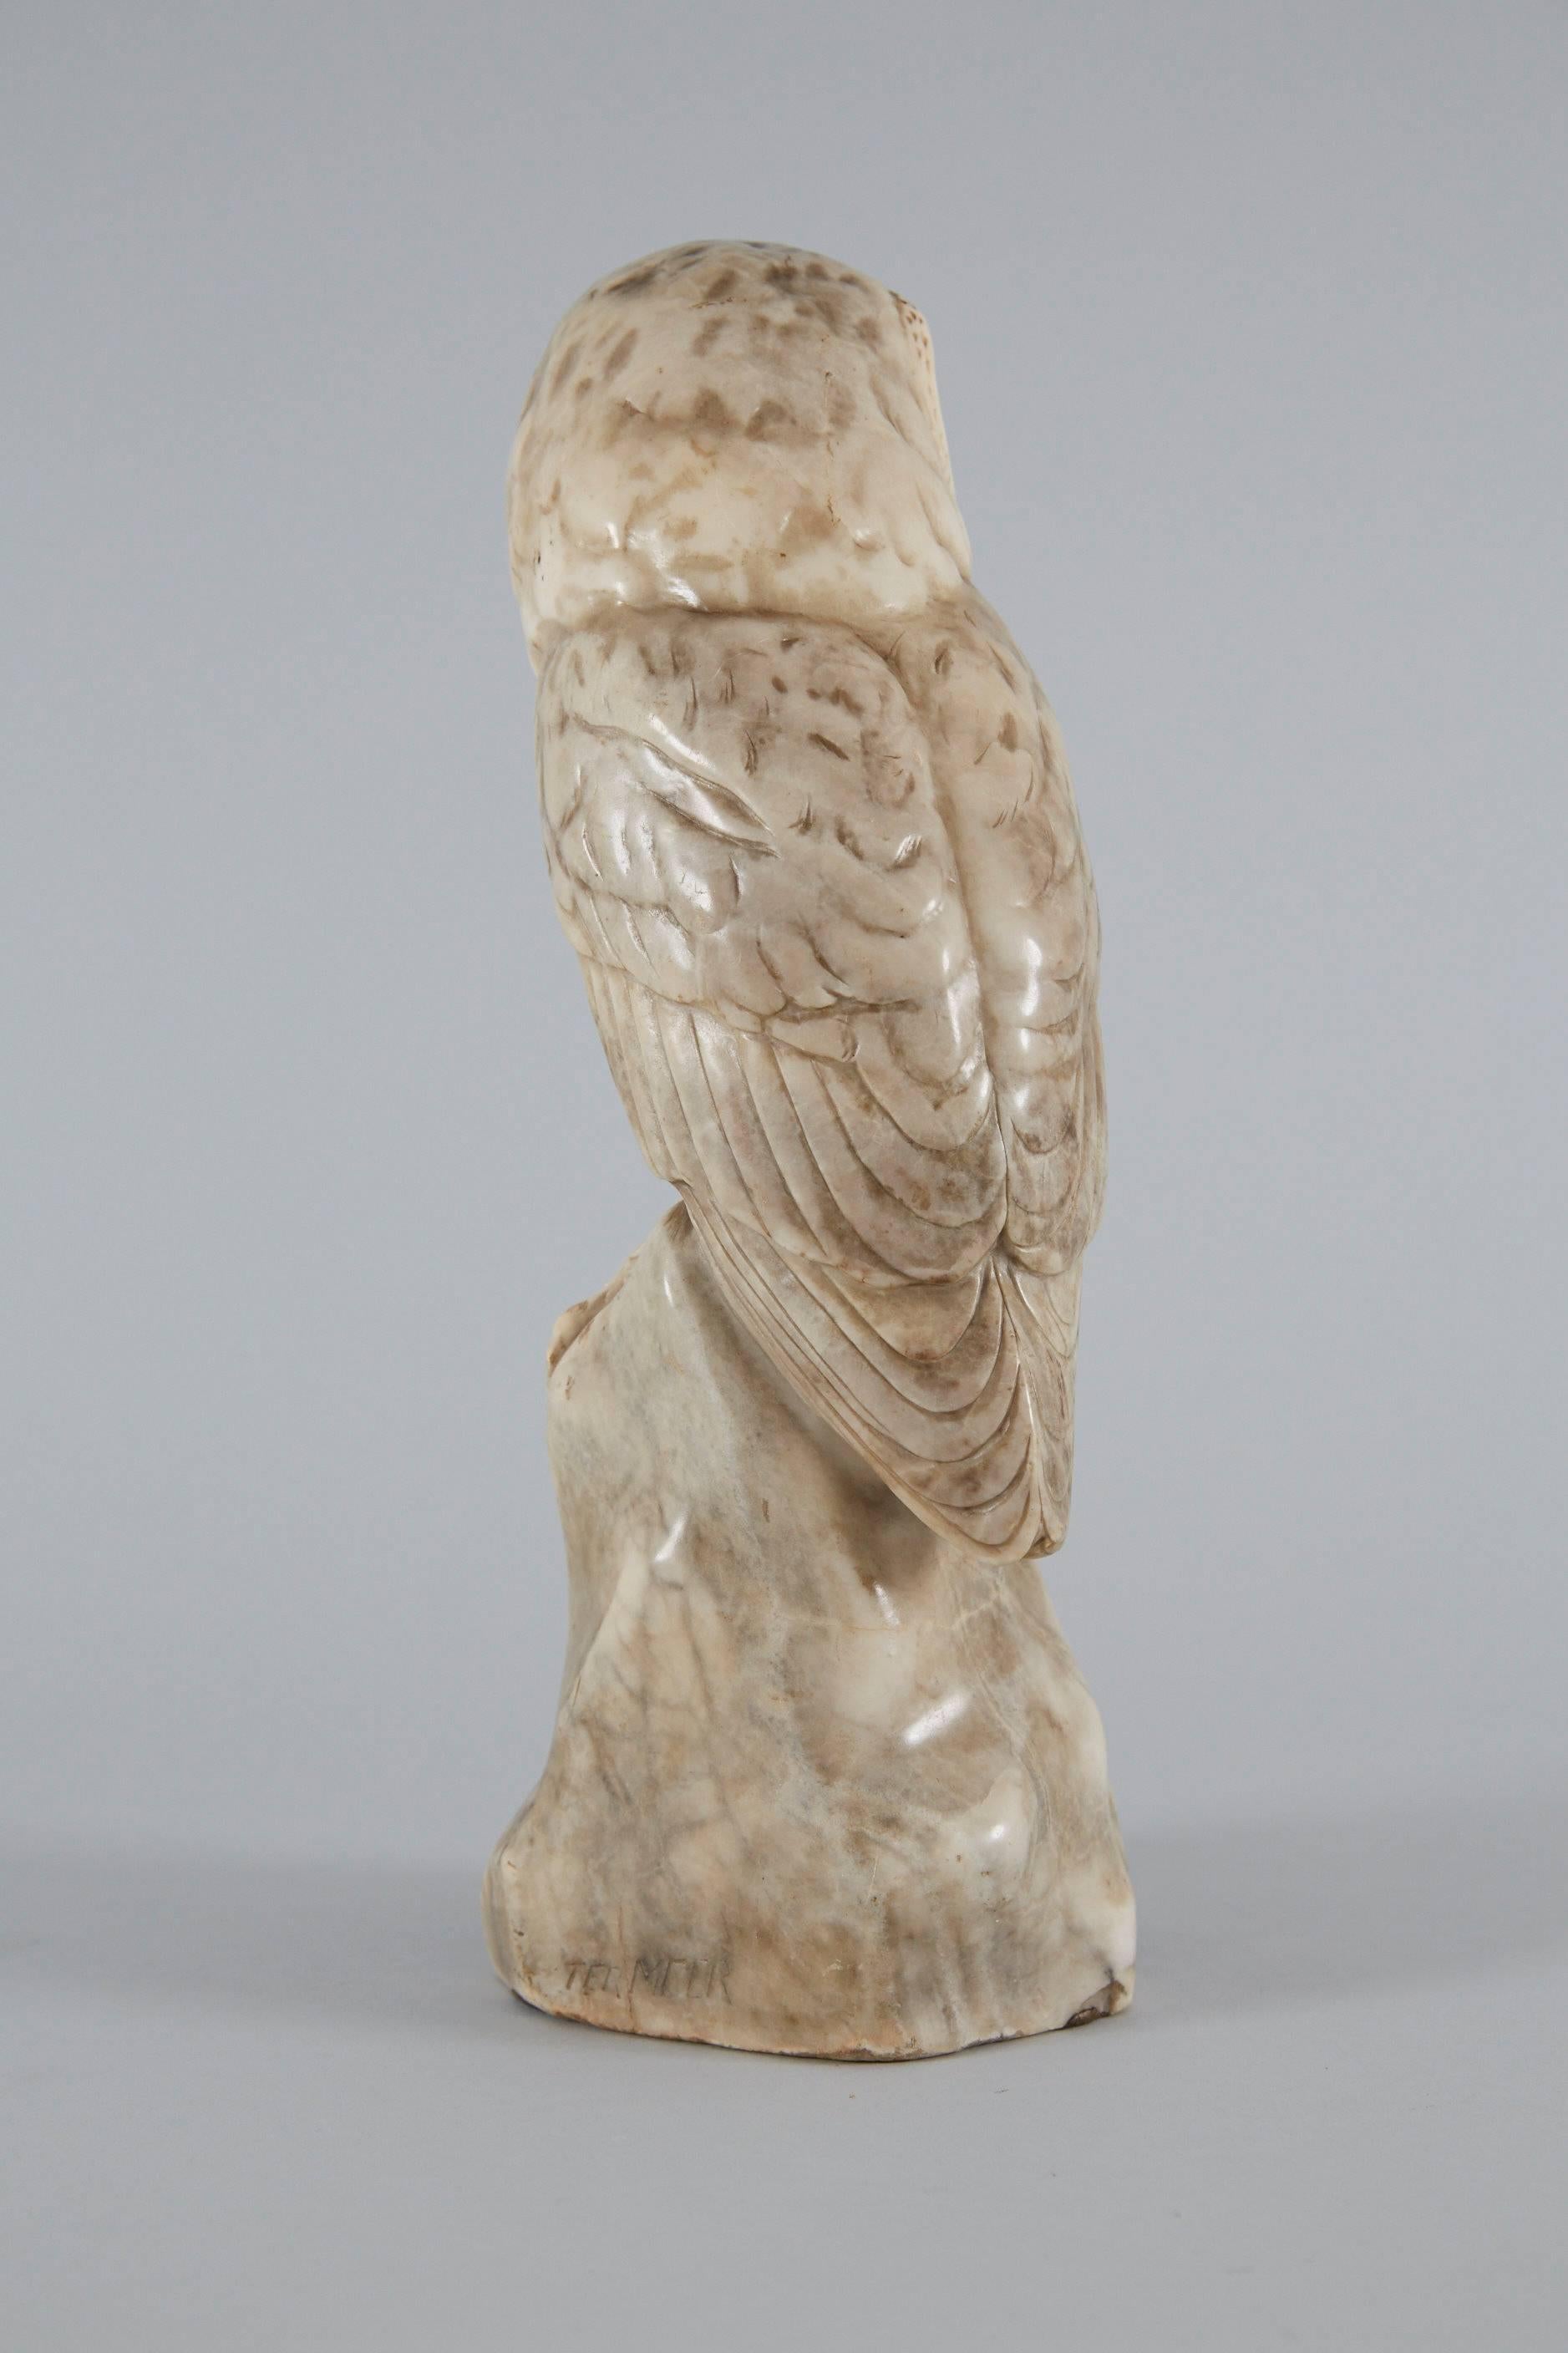 Sculpture of an alabaster owl. Marked on the stand in a metal badge Hofkunstanstalt Kochendörfer München.